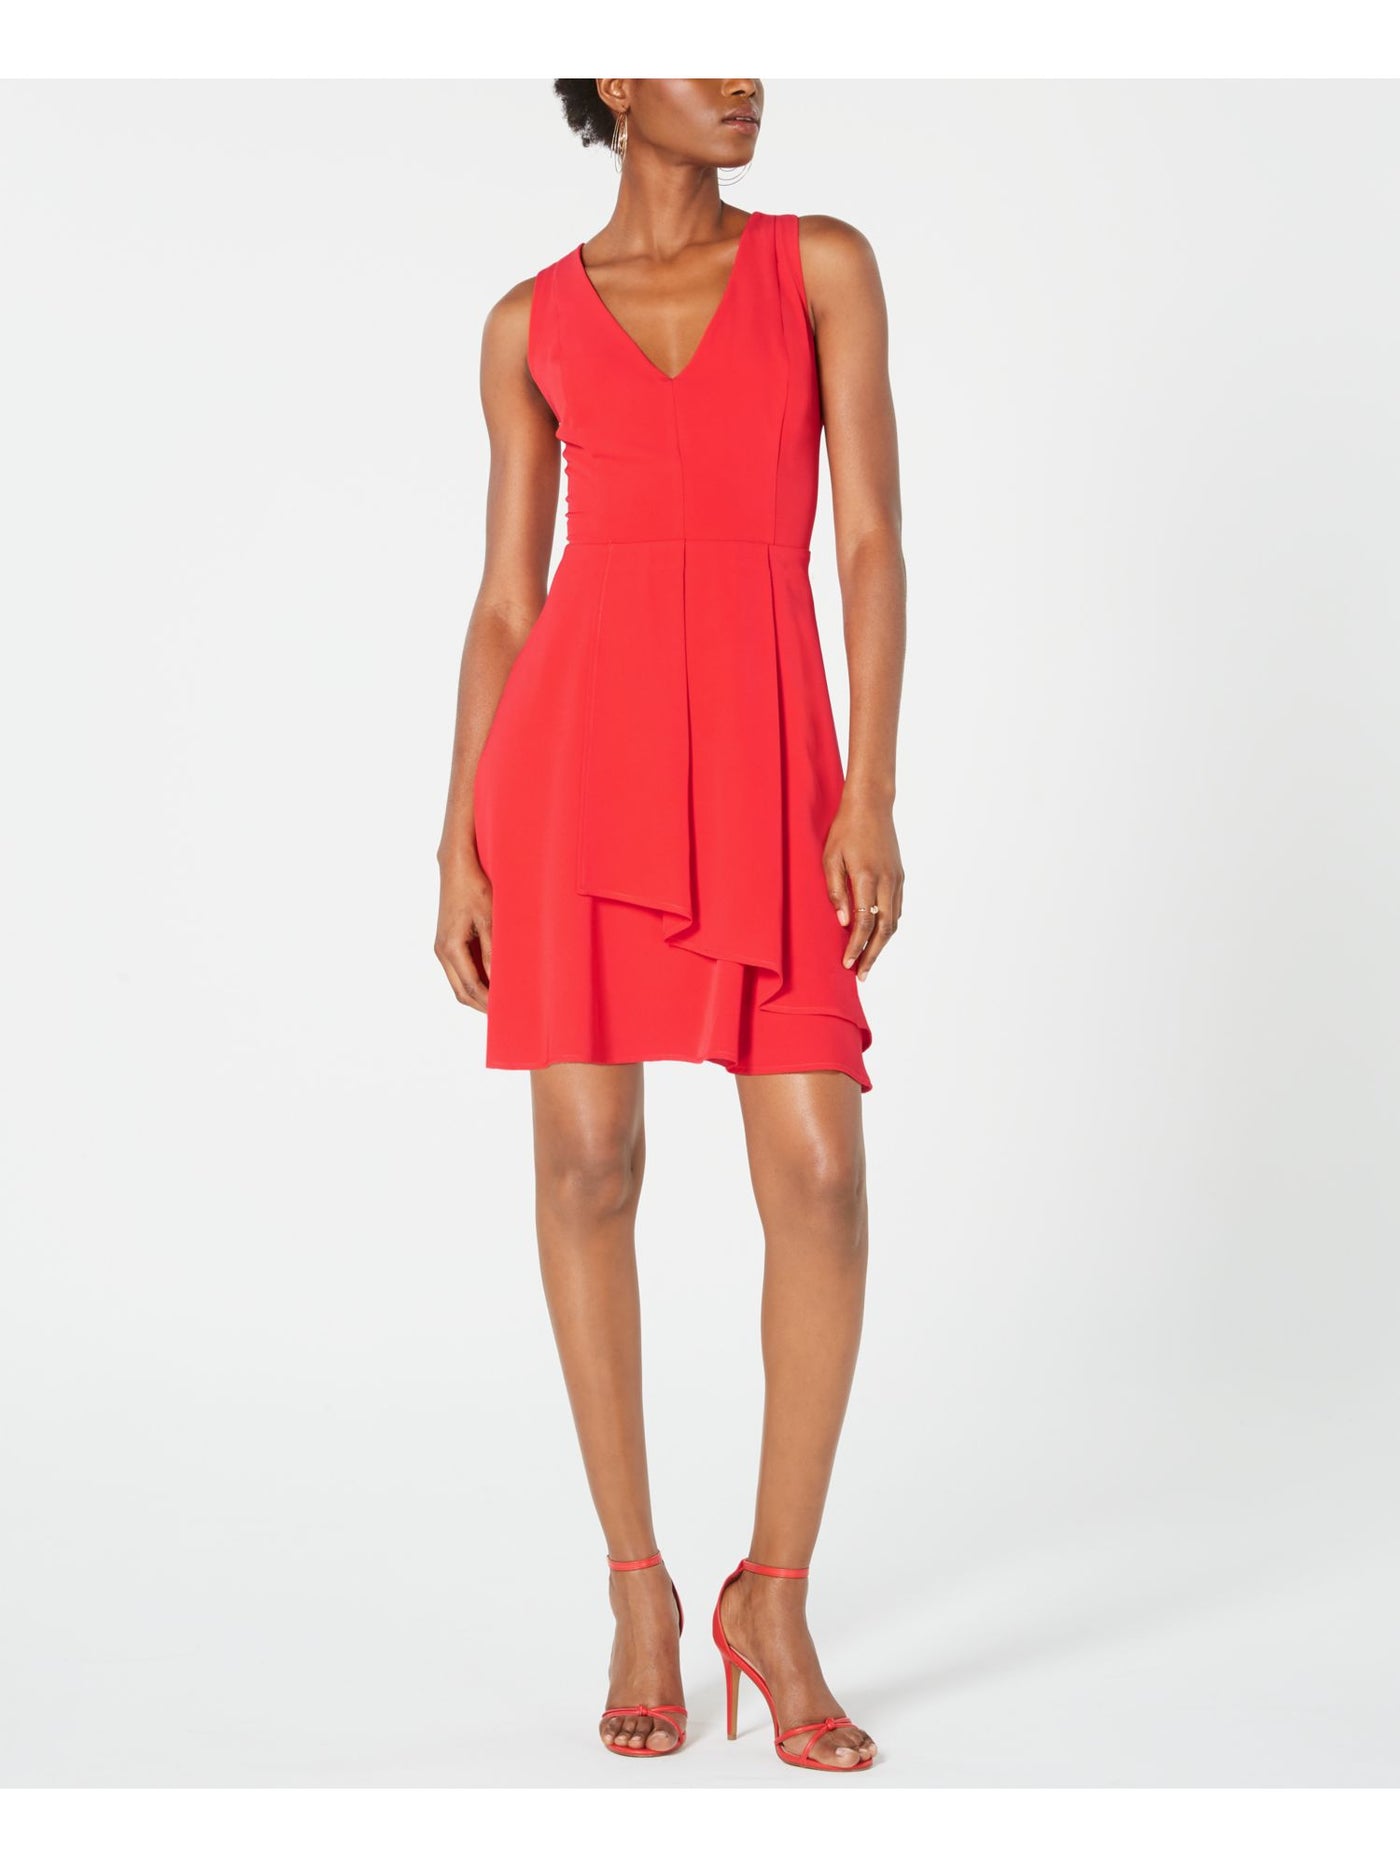 19 COOPER Womens Red Sleeveless V Neck Mini Fit + Flare Dress S